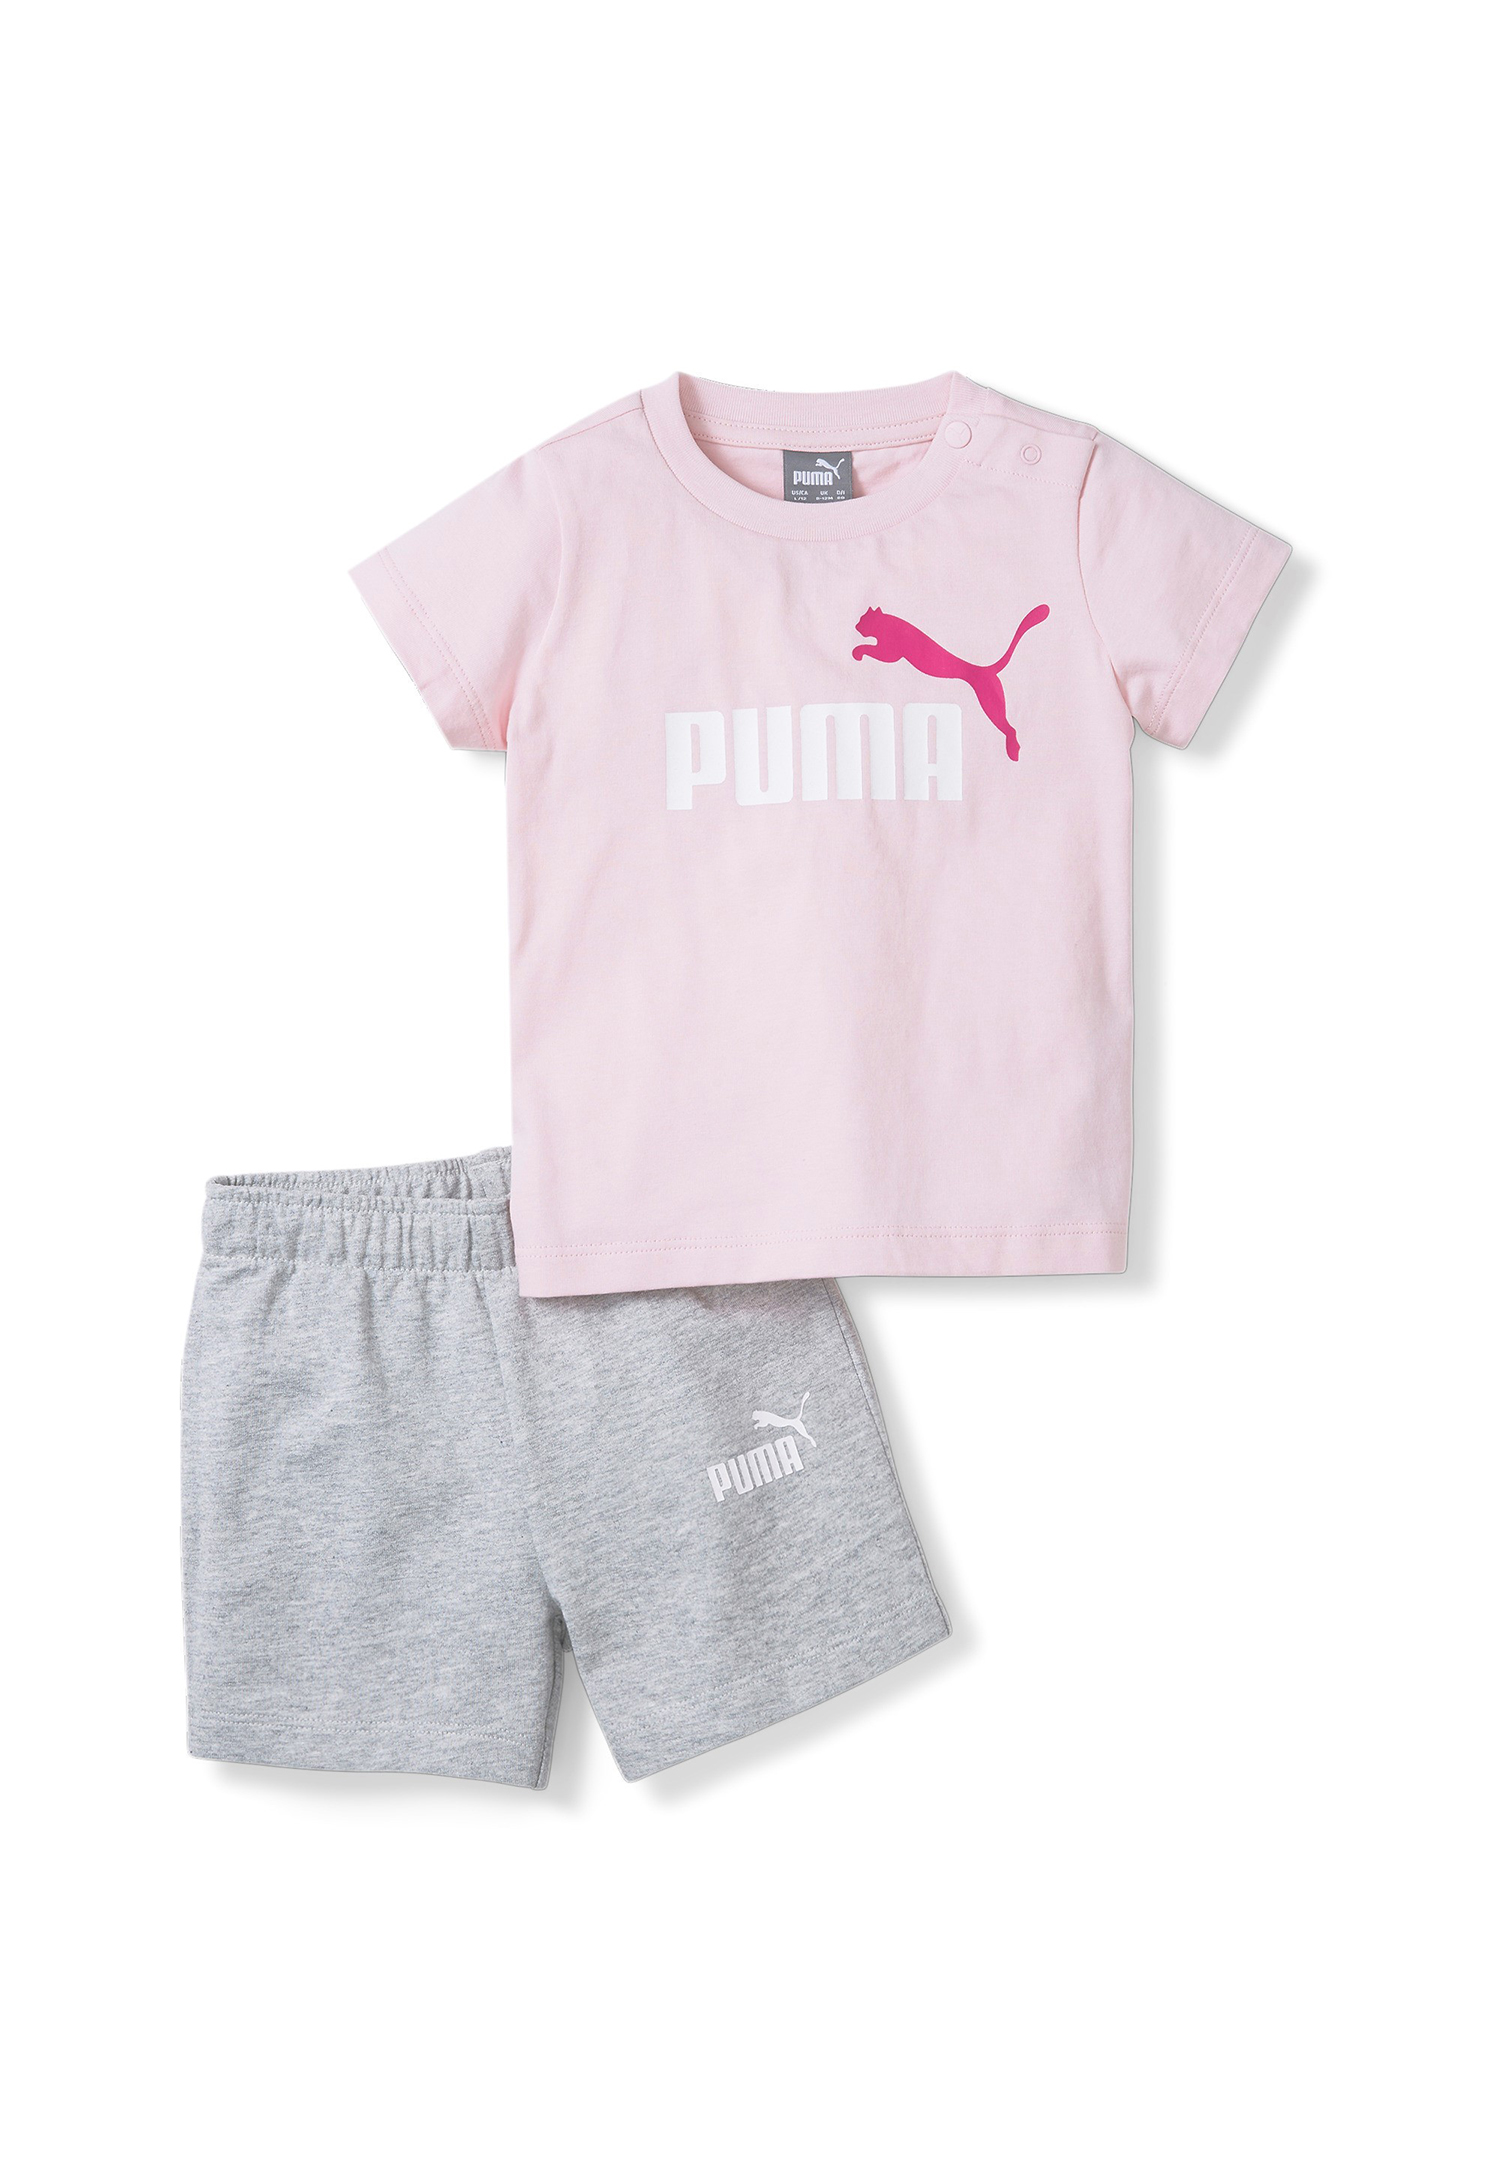 Puma Minicats Tee & Shorts Set rosa/grau 845839 16 von Puma